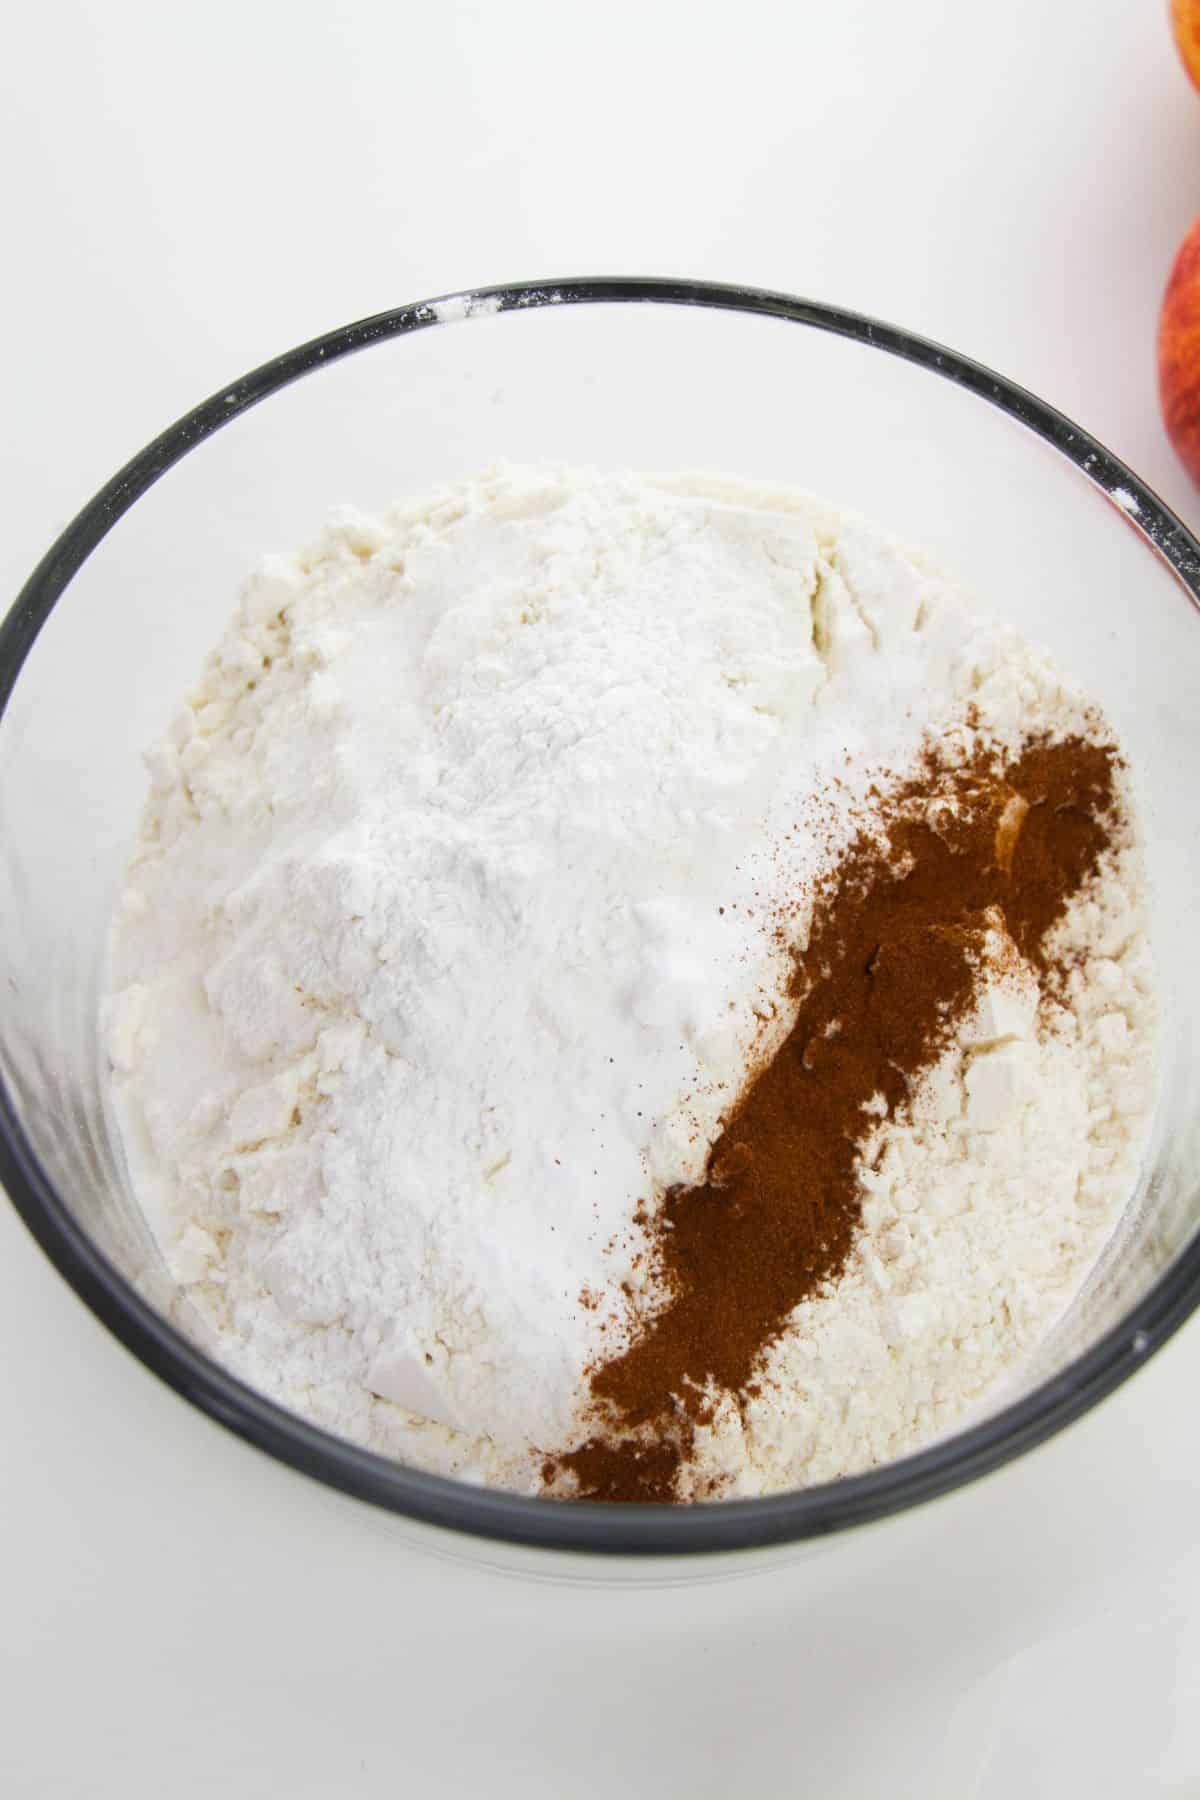 All-purpose flour, baking powder, salt,
baking soda and cinnamon in a mixing bowl.